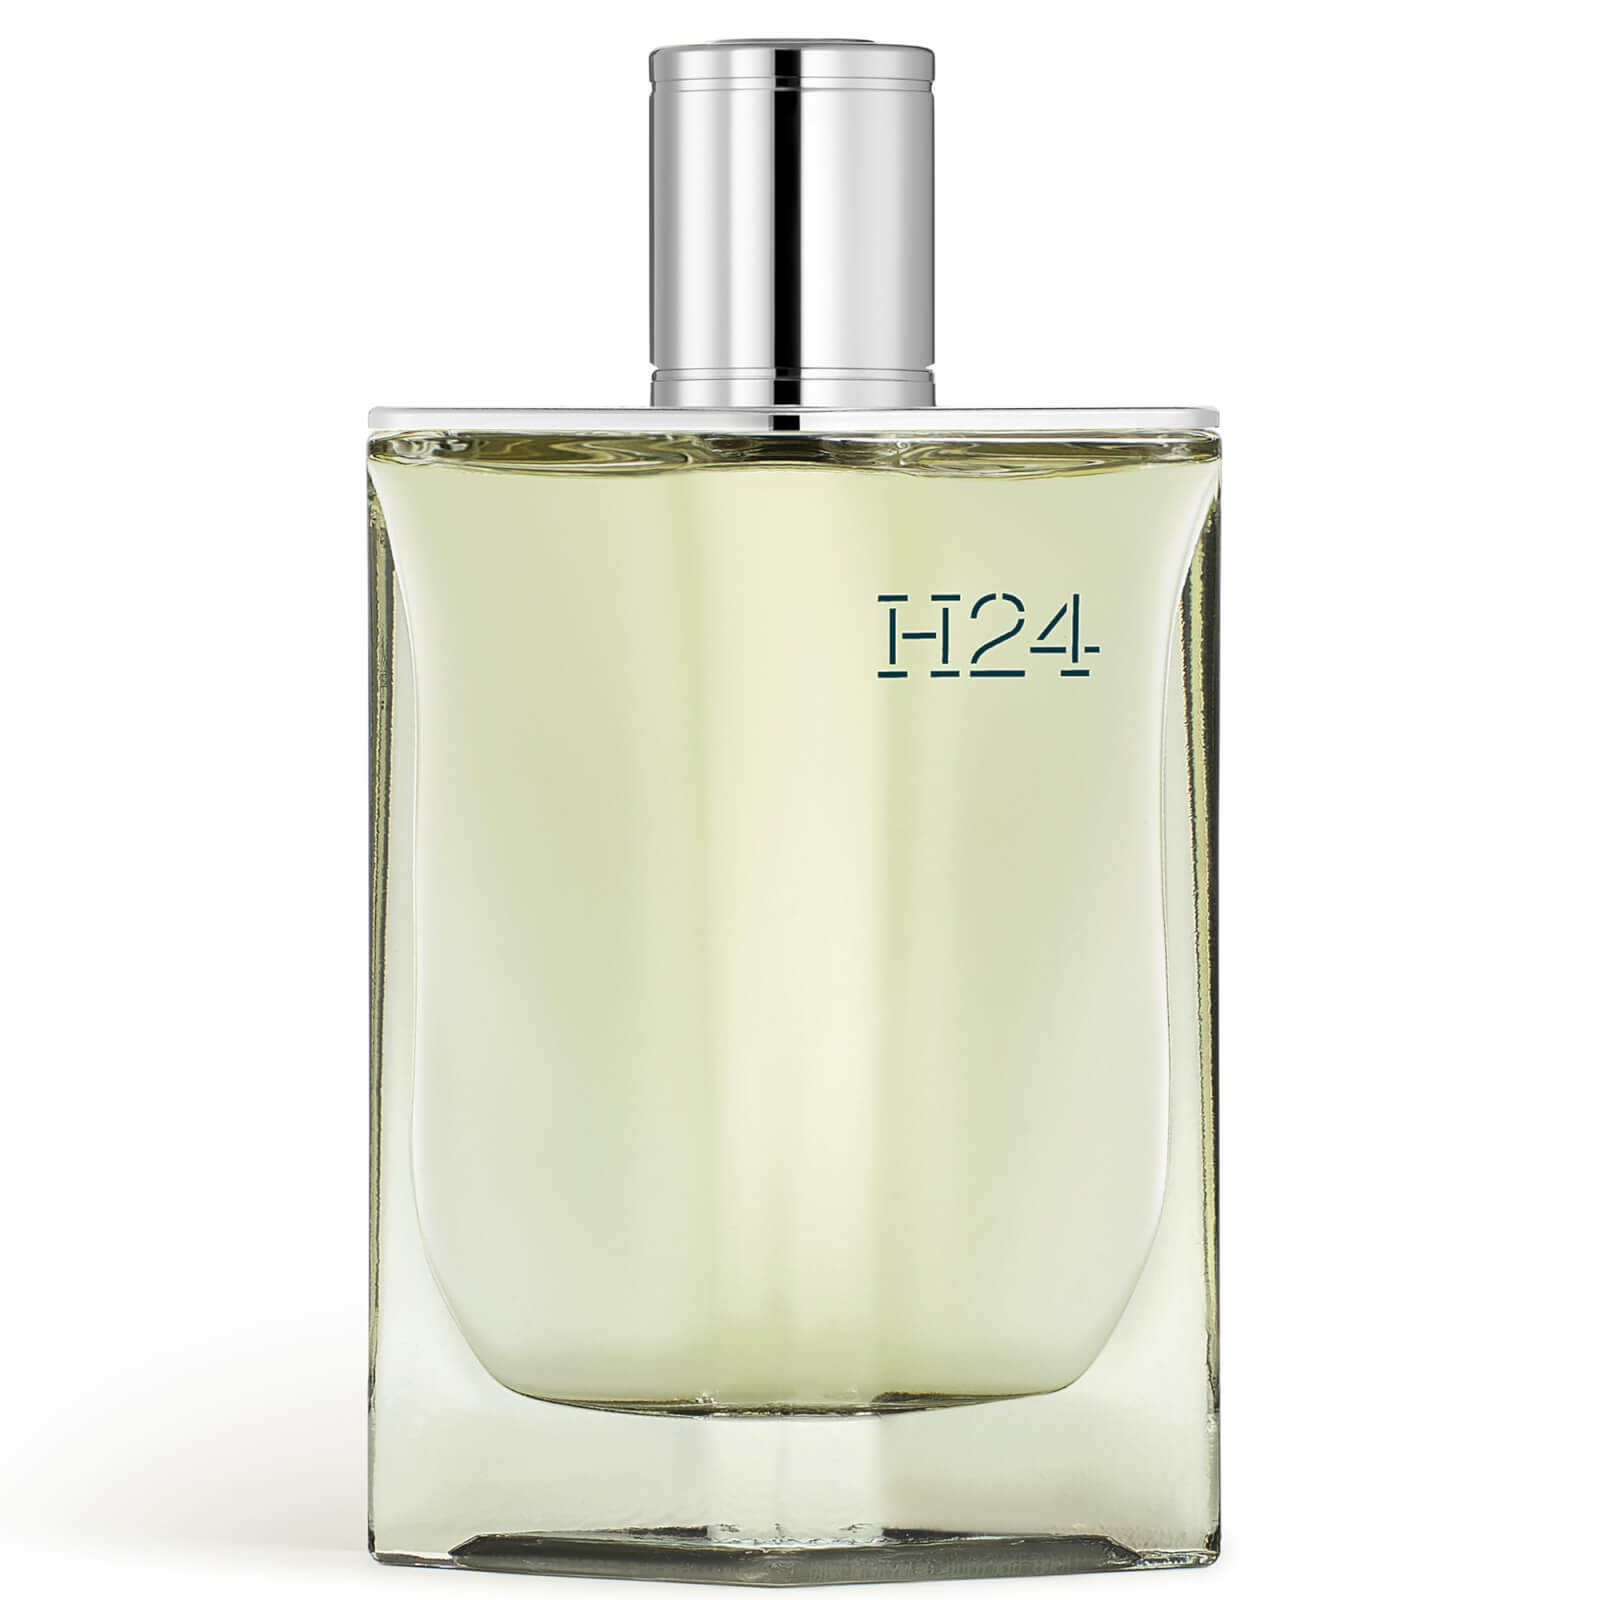 Photos - Women's Fragrance Hermes Hermès H24 Eau de Parfum Refillable Natural Spray 100ml 108421V0 